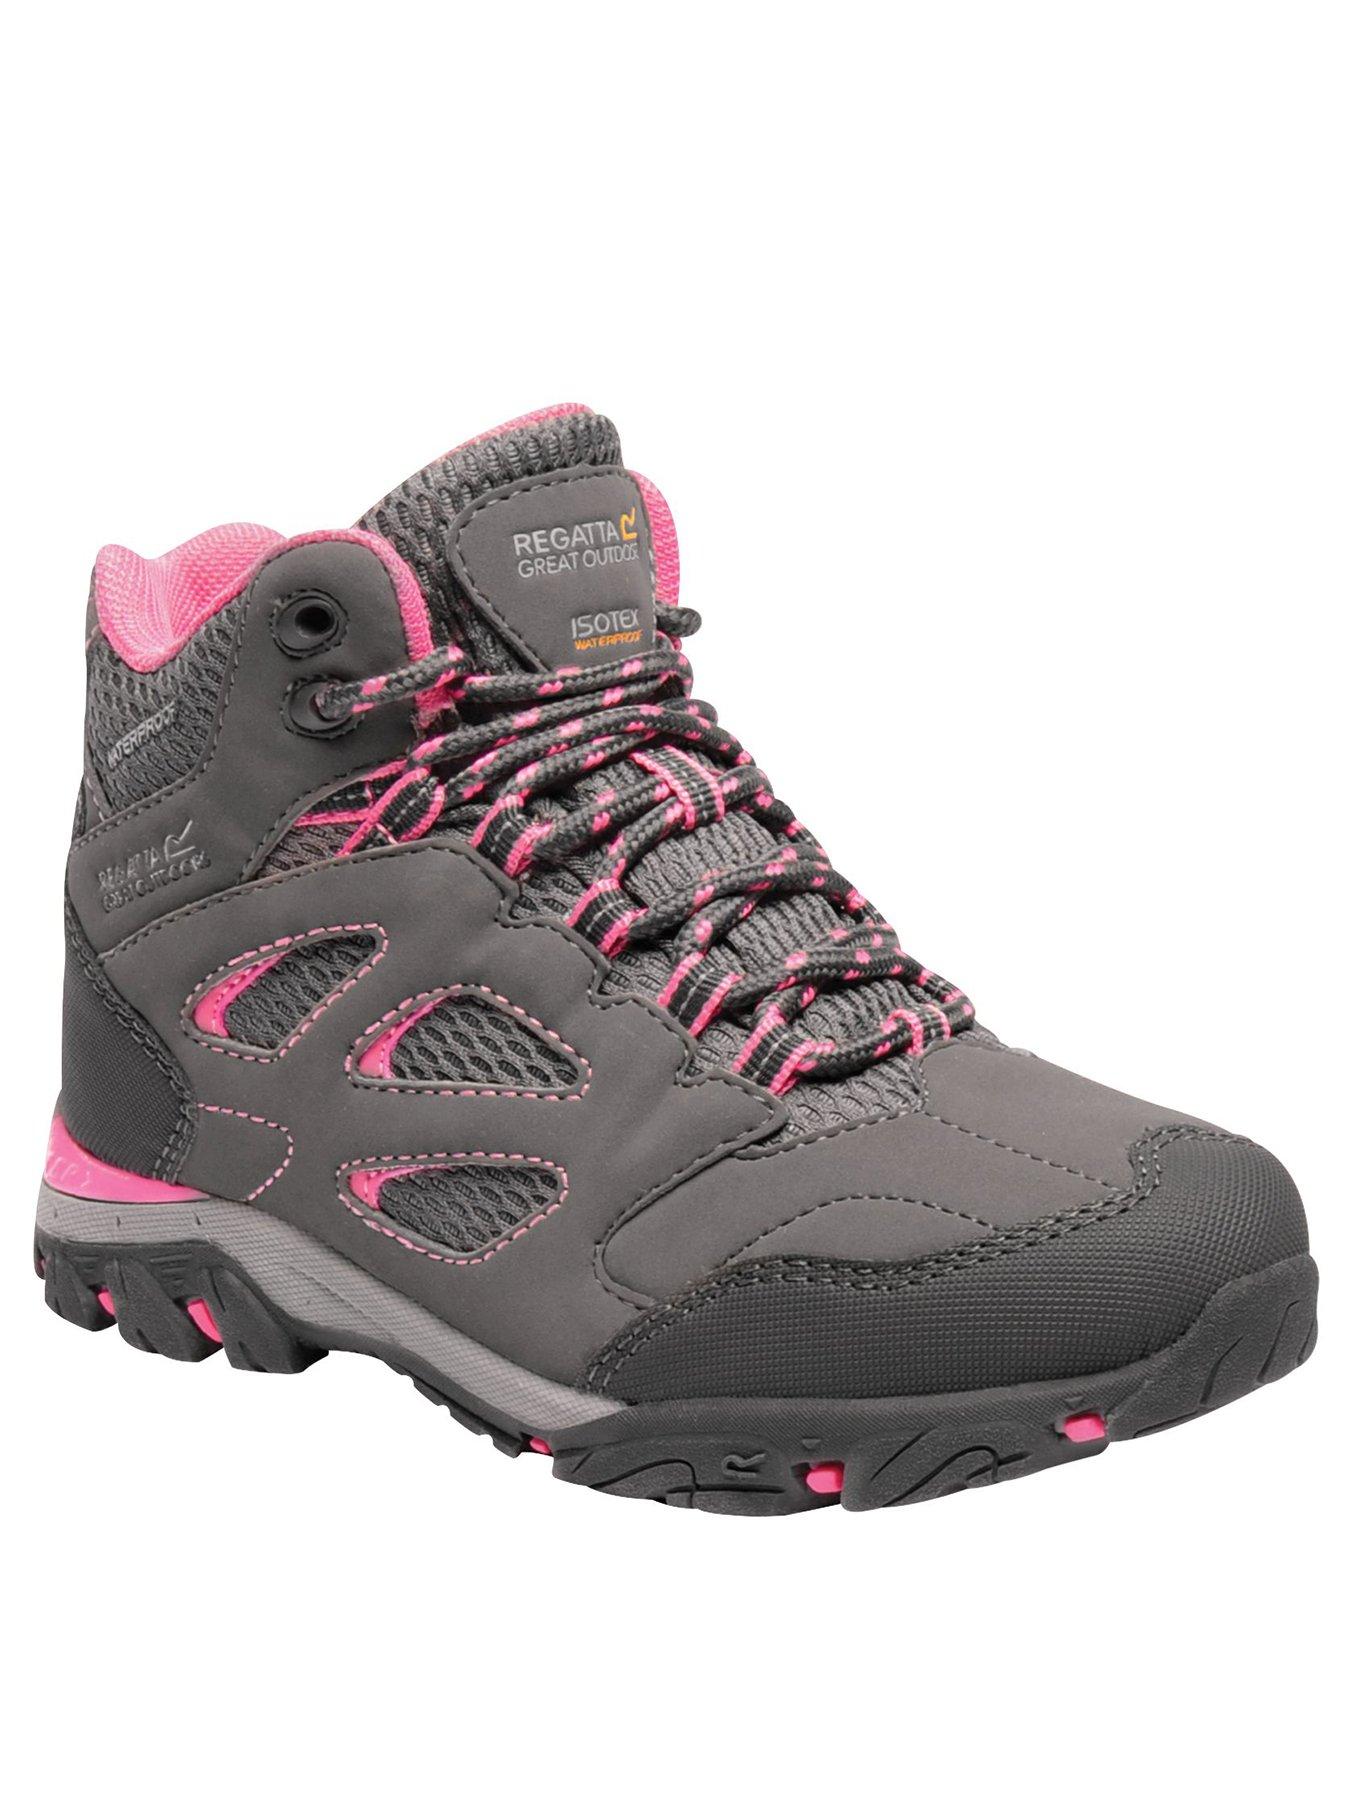 Kids Holcombe IEP Mid Junior Walking Boots - Grey/Pink